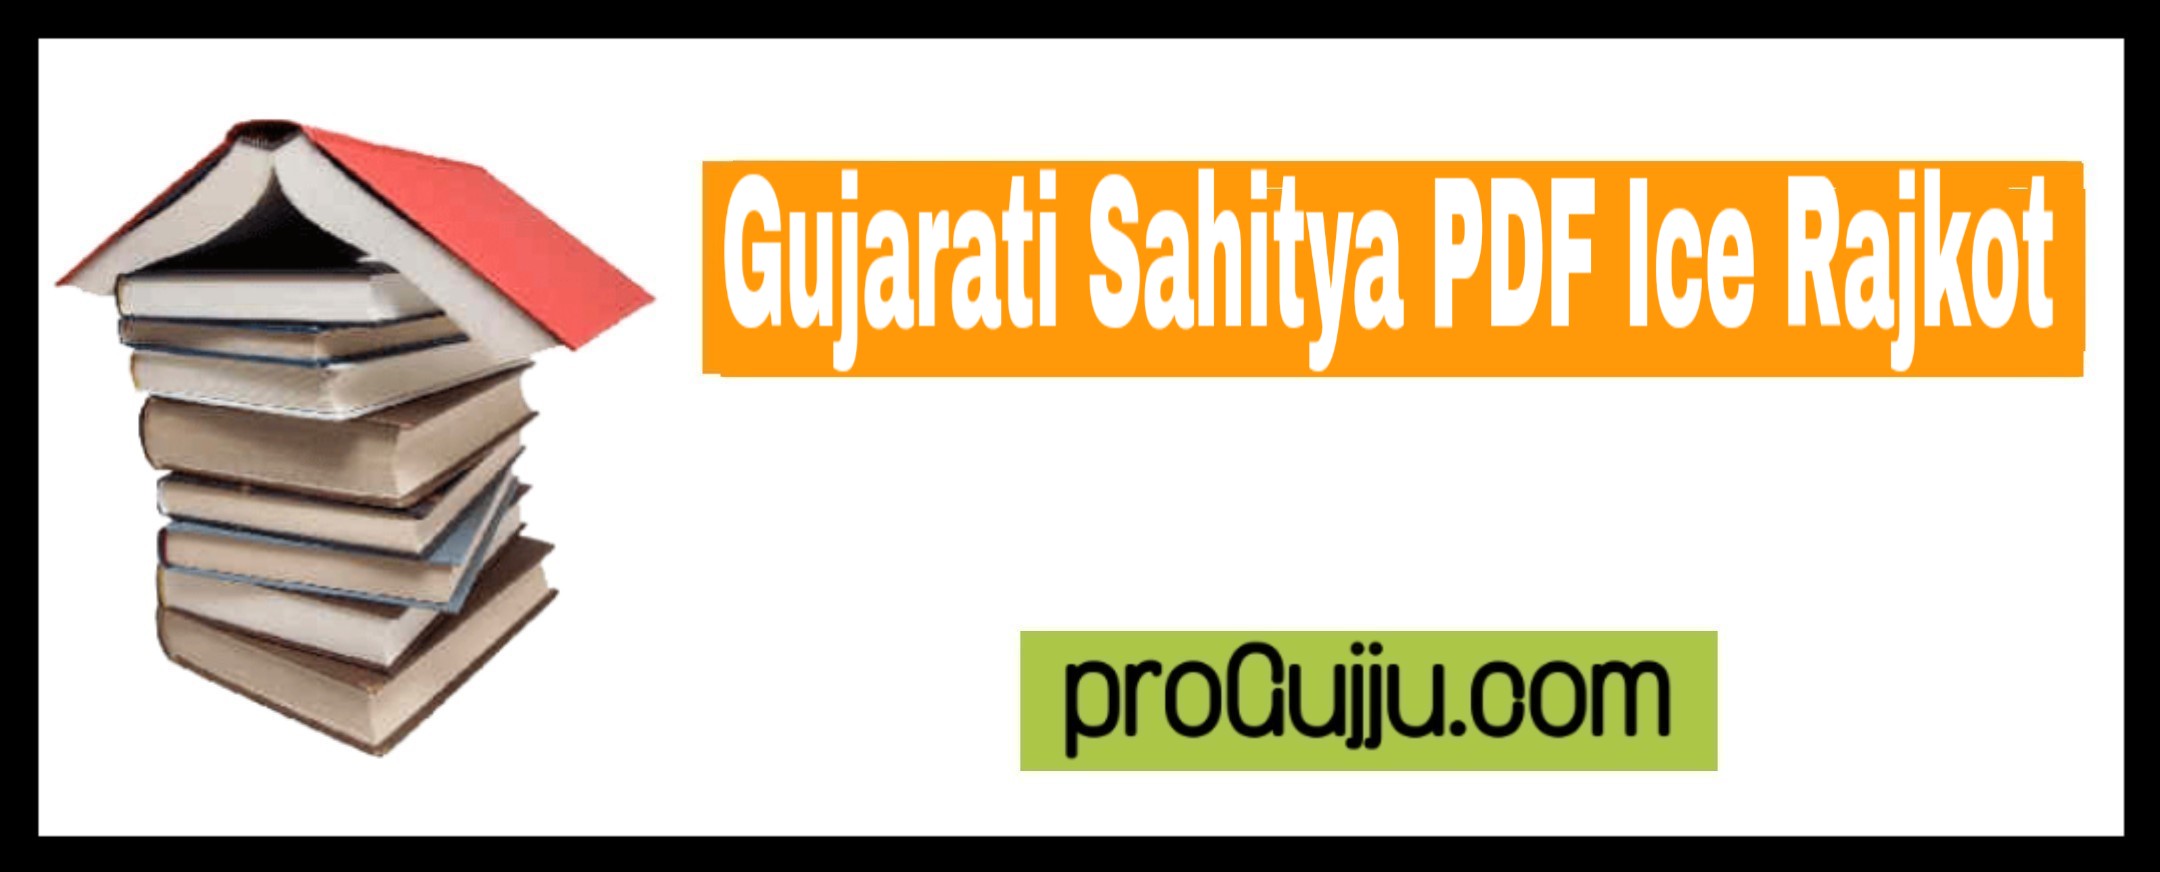 Gujarati Sahitya PDF Ice Rajkot